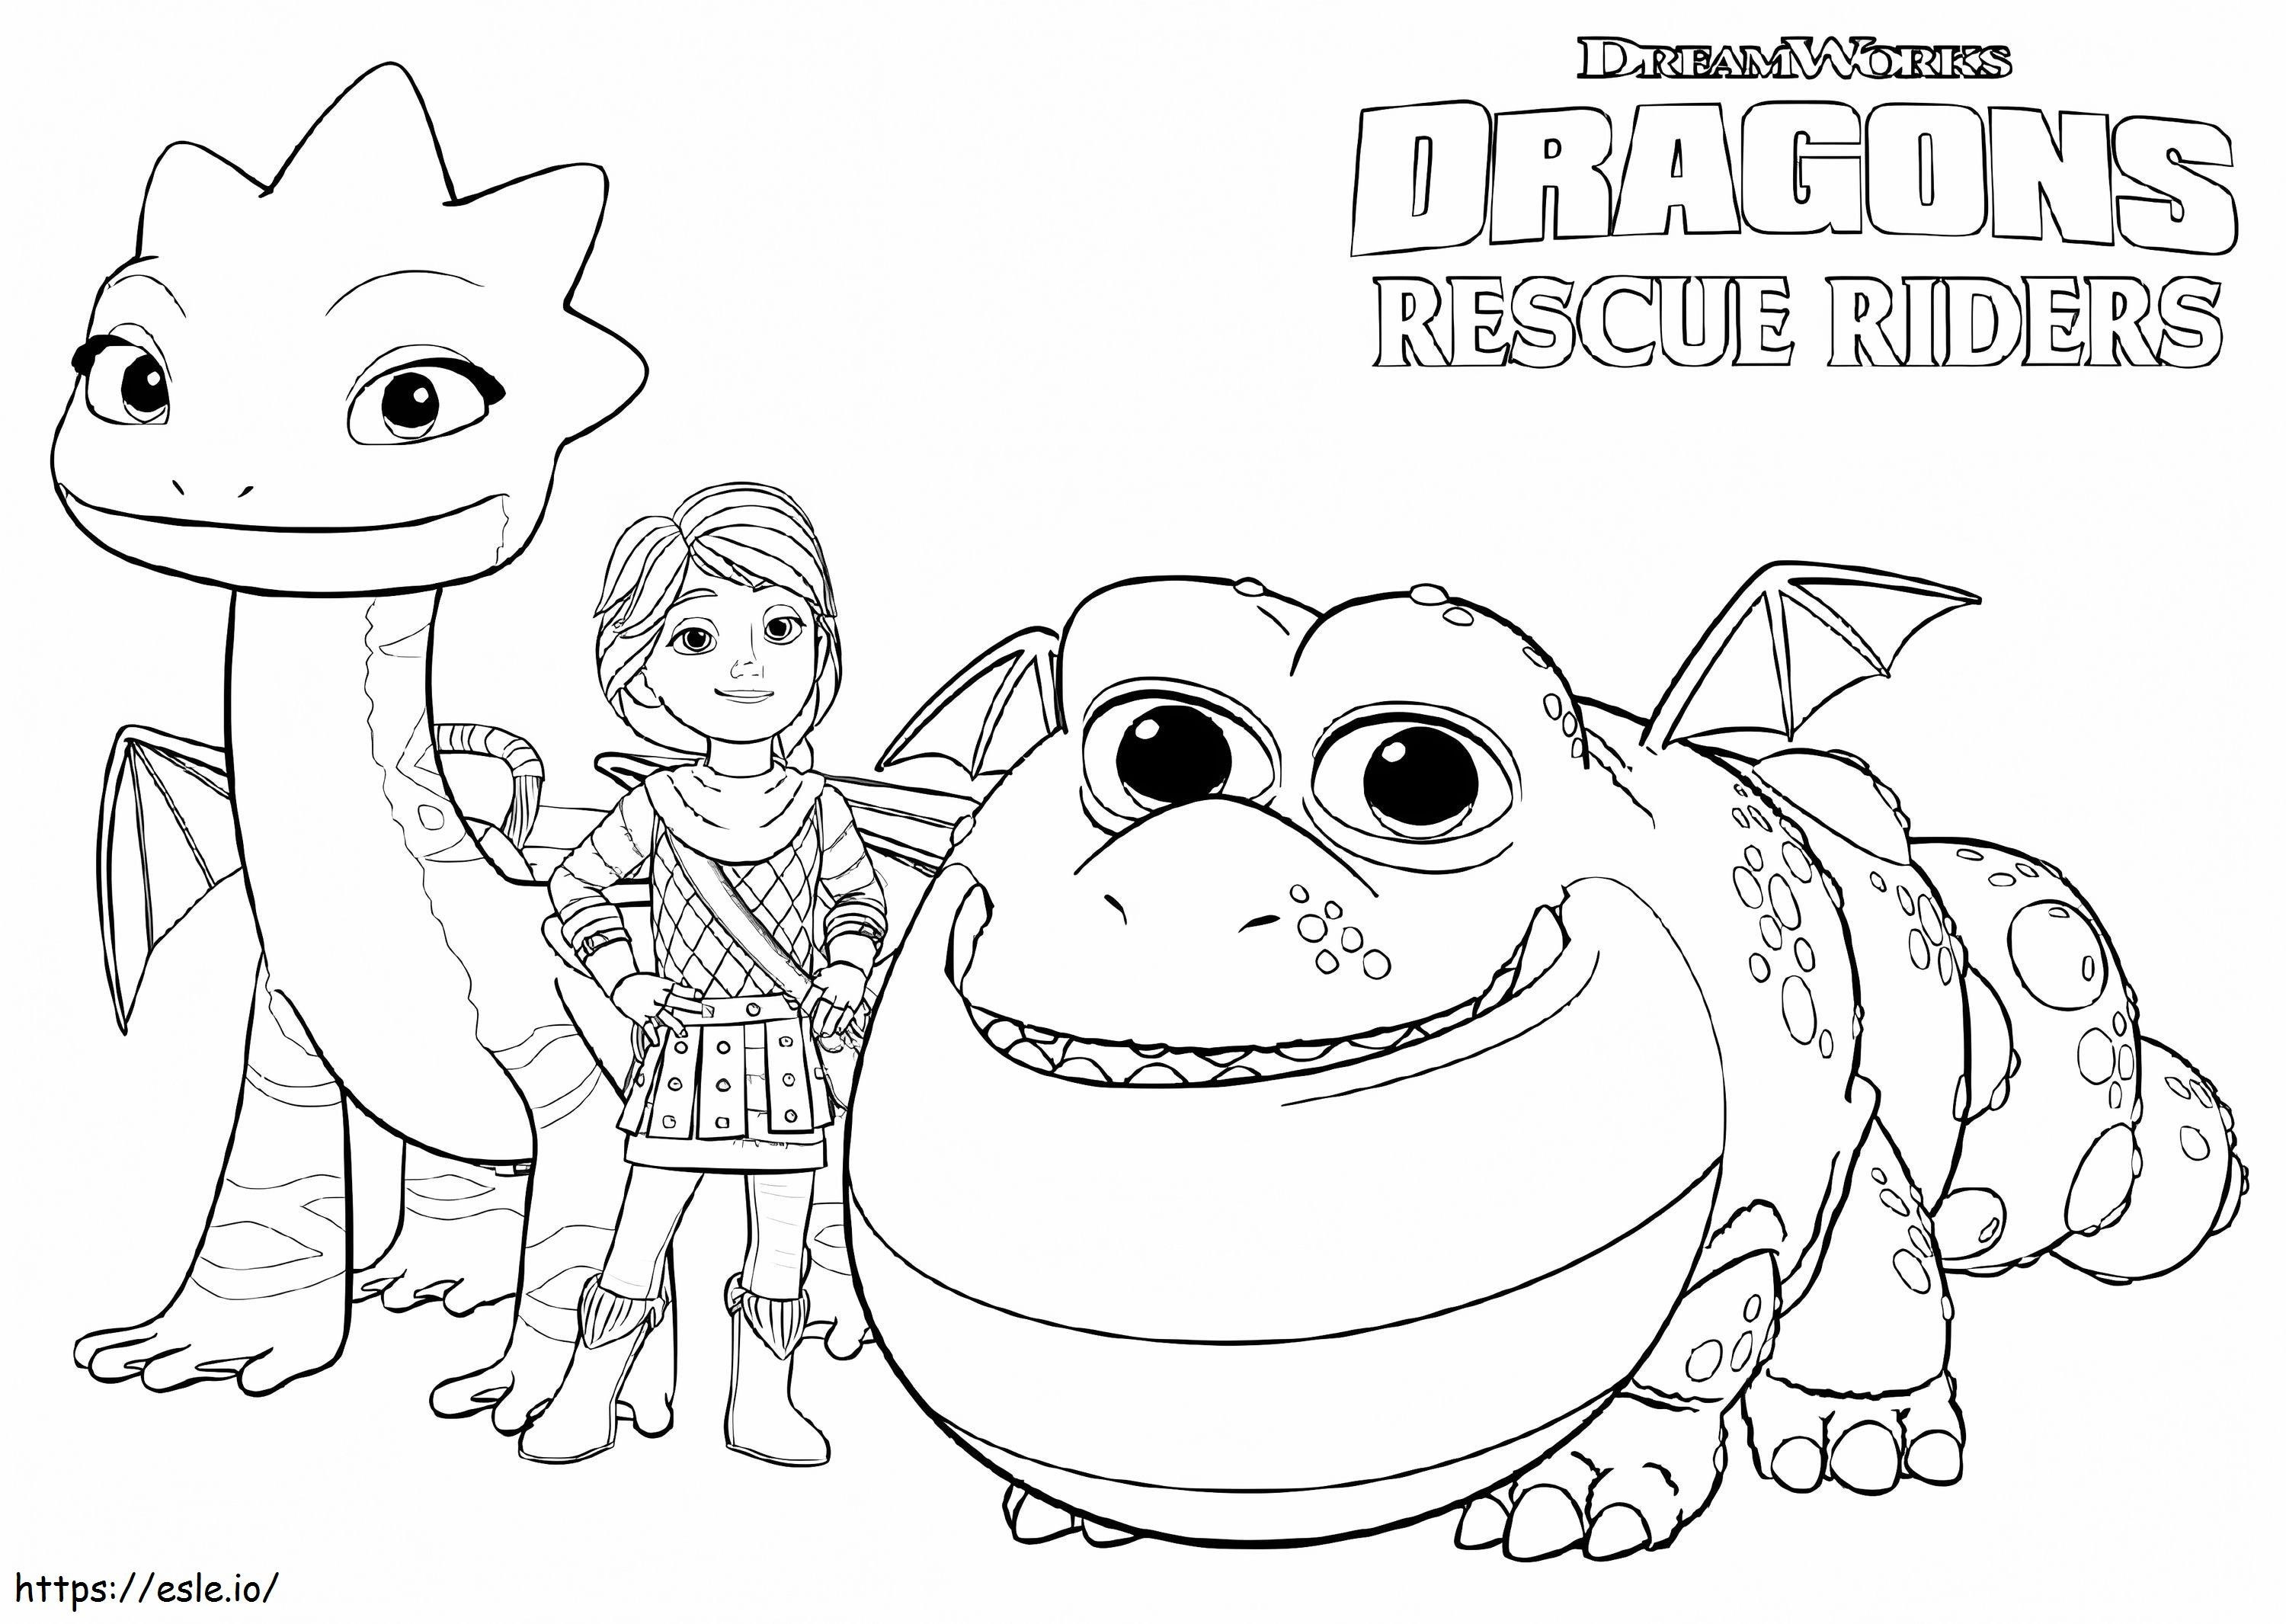 Dragons Rescue Riders pentru a imprima de colorat